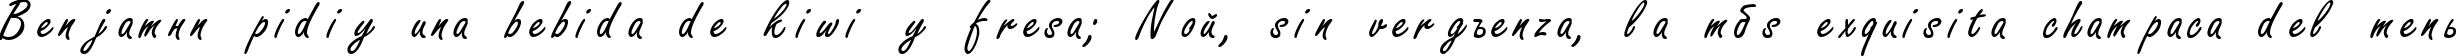 Пример написания шрифтом Freestyle Script Normal текста на испанском